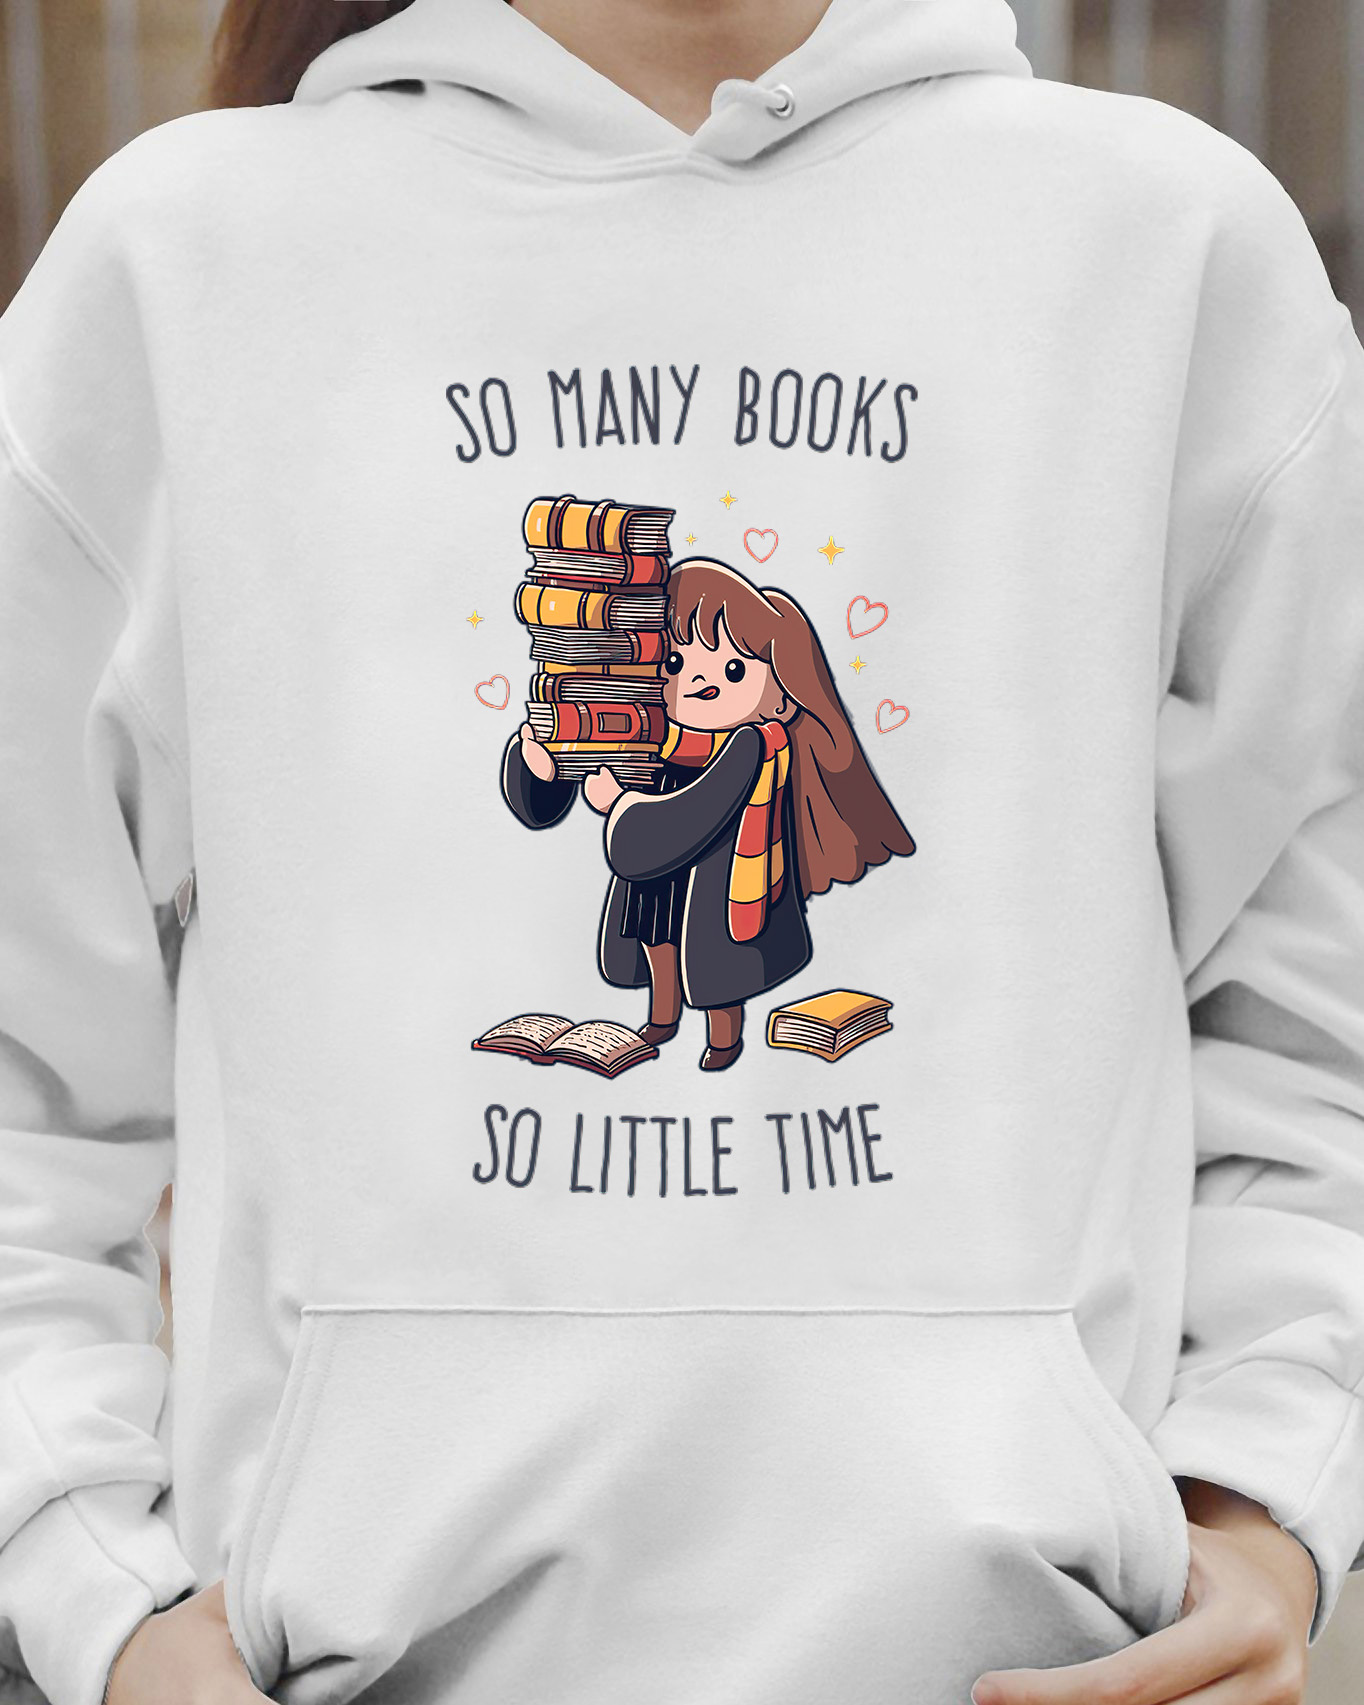 So many books so little time - Books lover